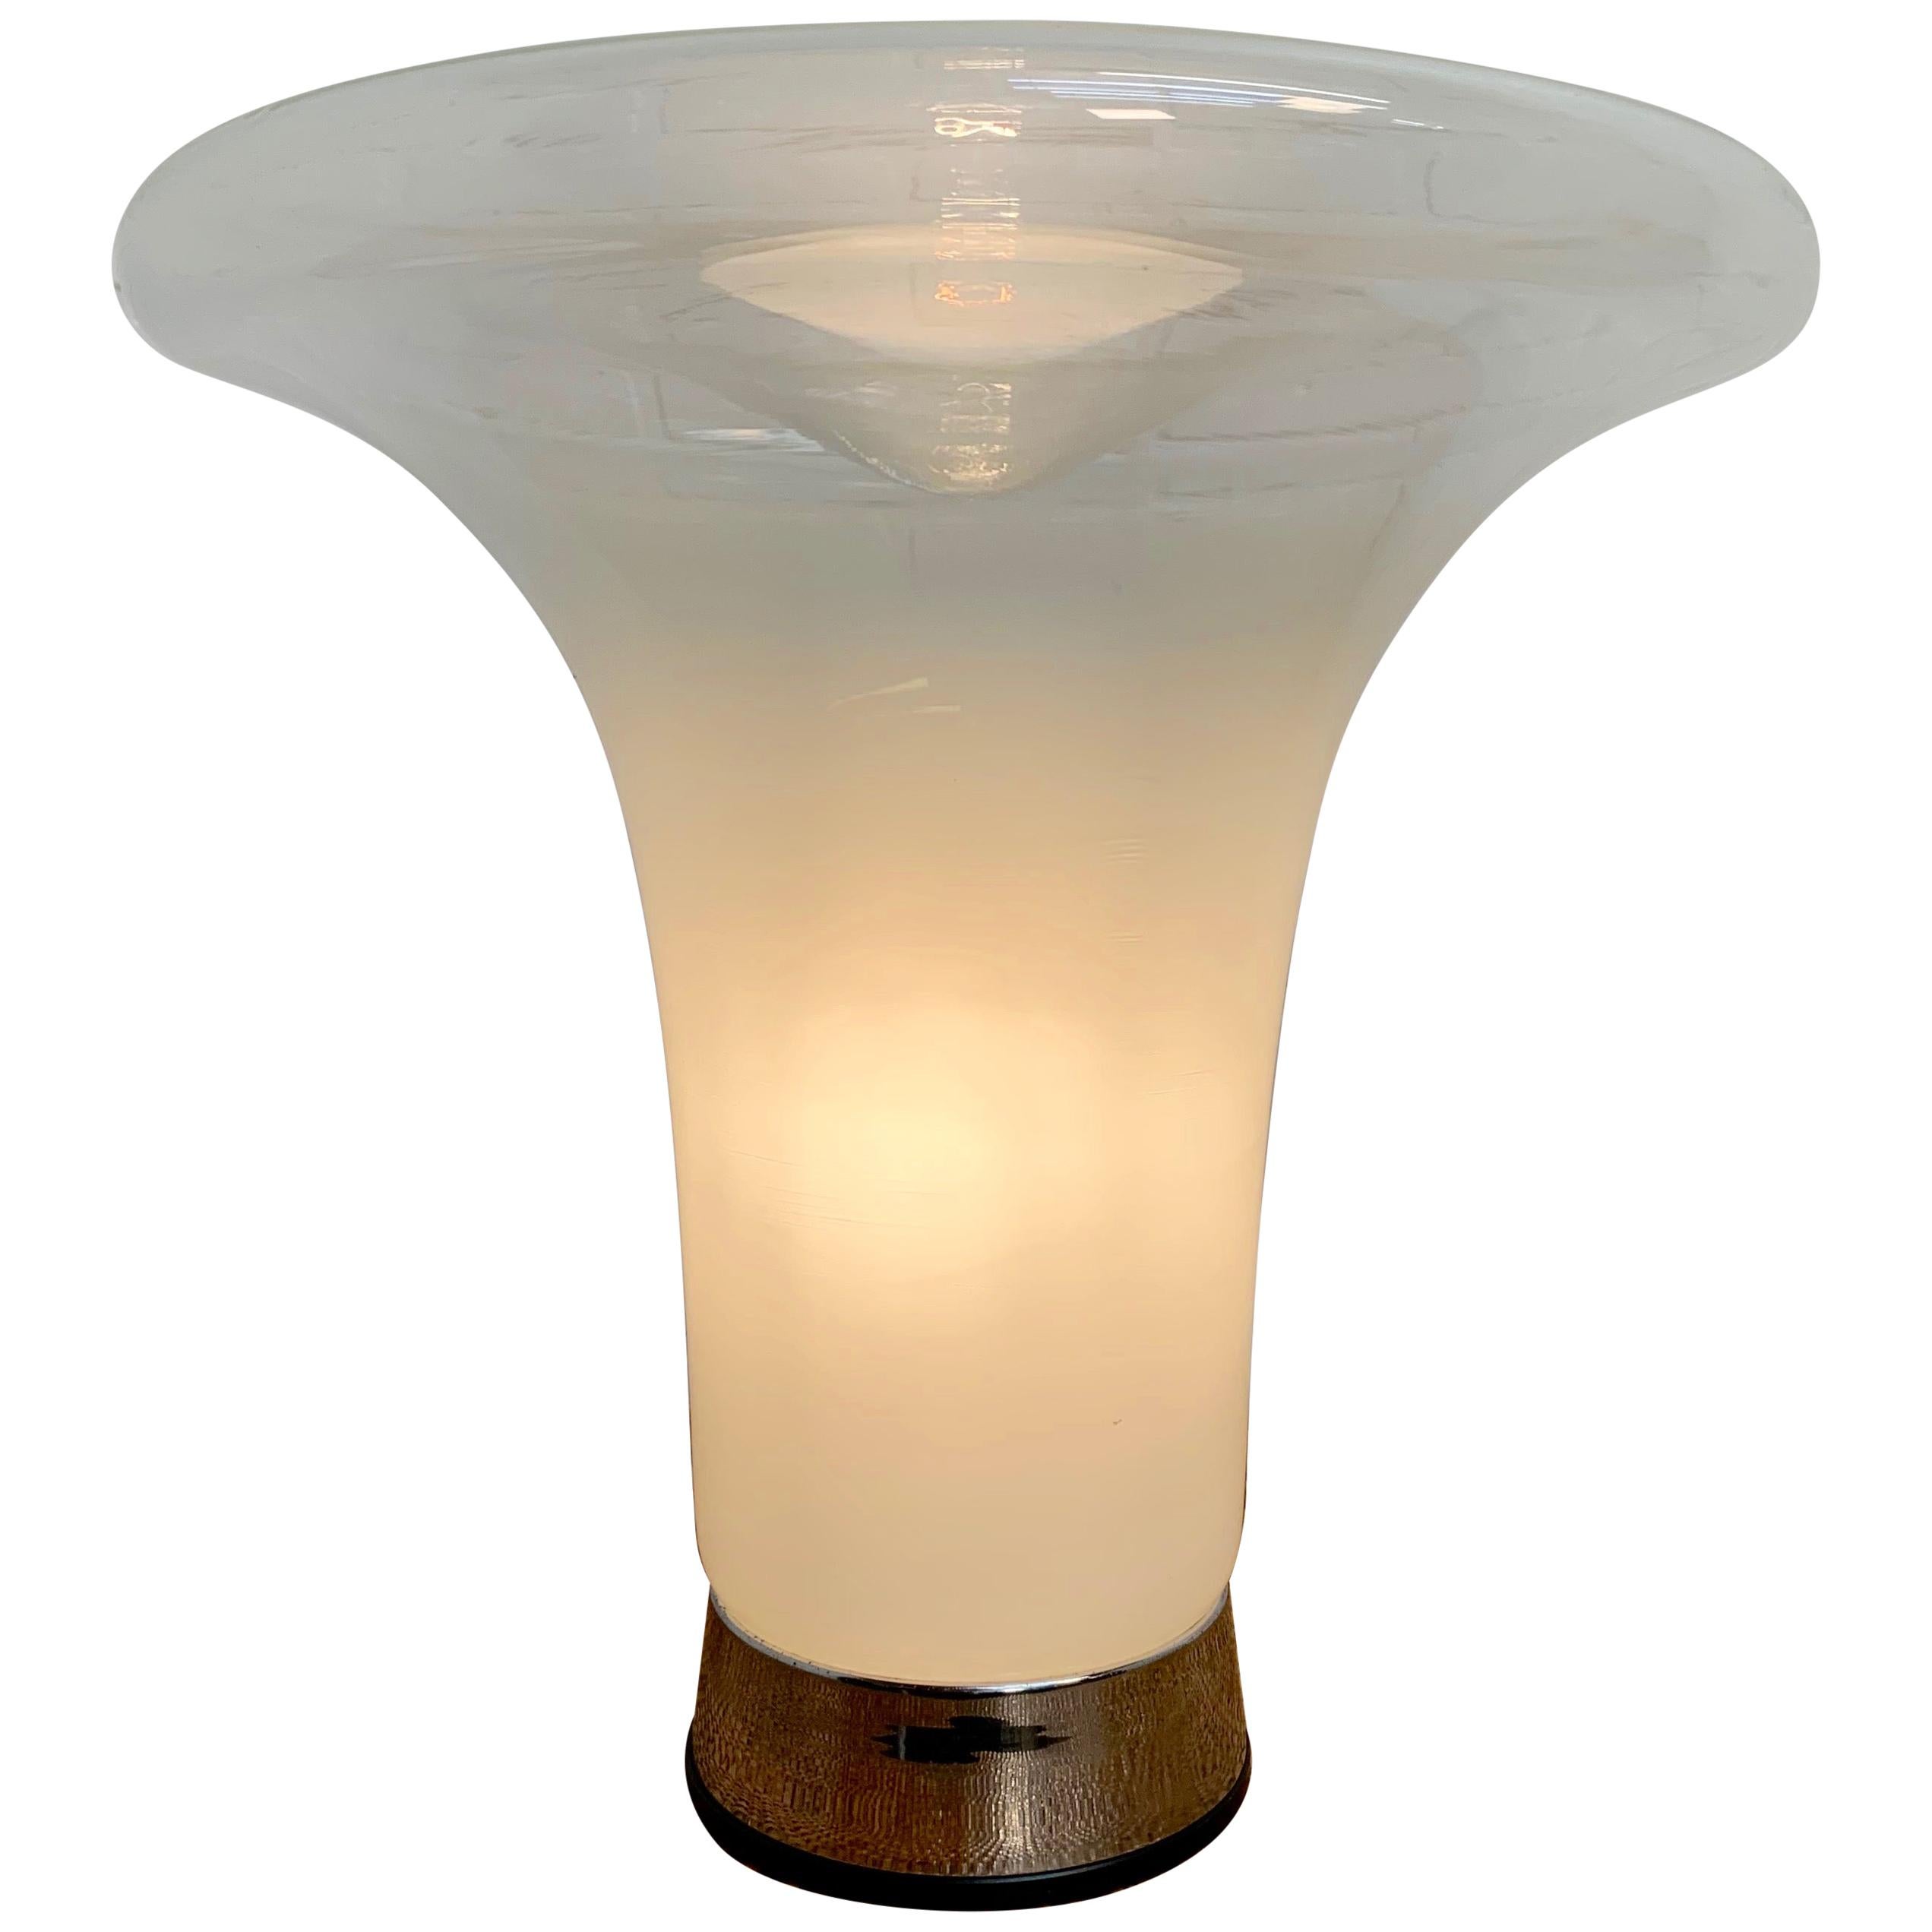  Angelo Mangiarotti Lesbo Table Lamp for Artemide Italian Blown Glass 1960s